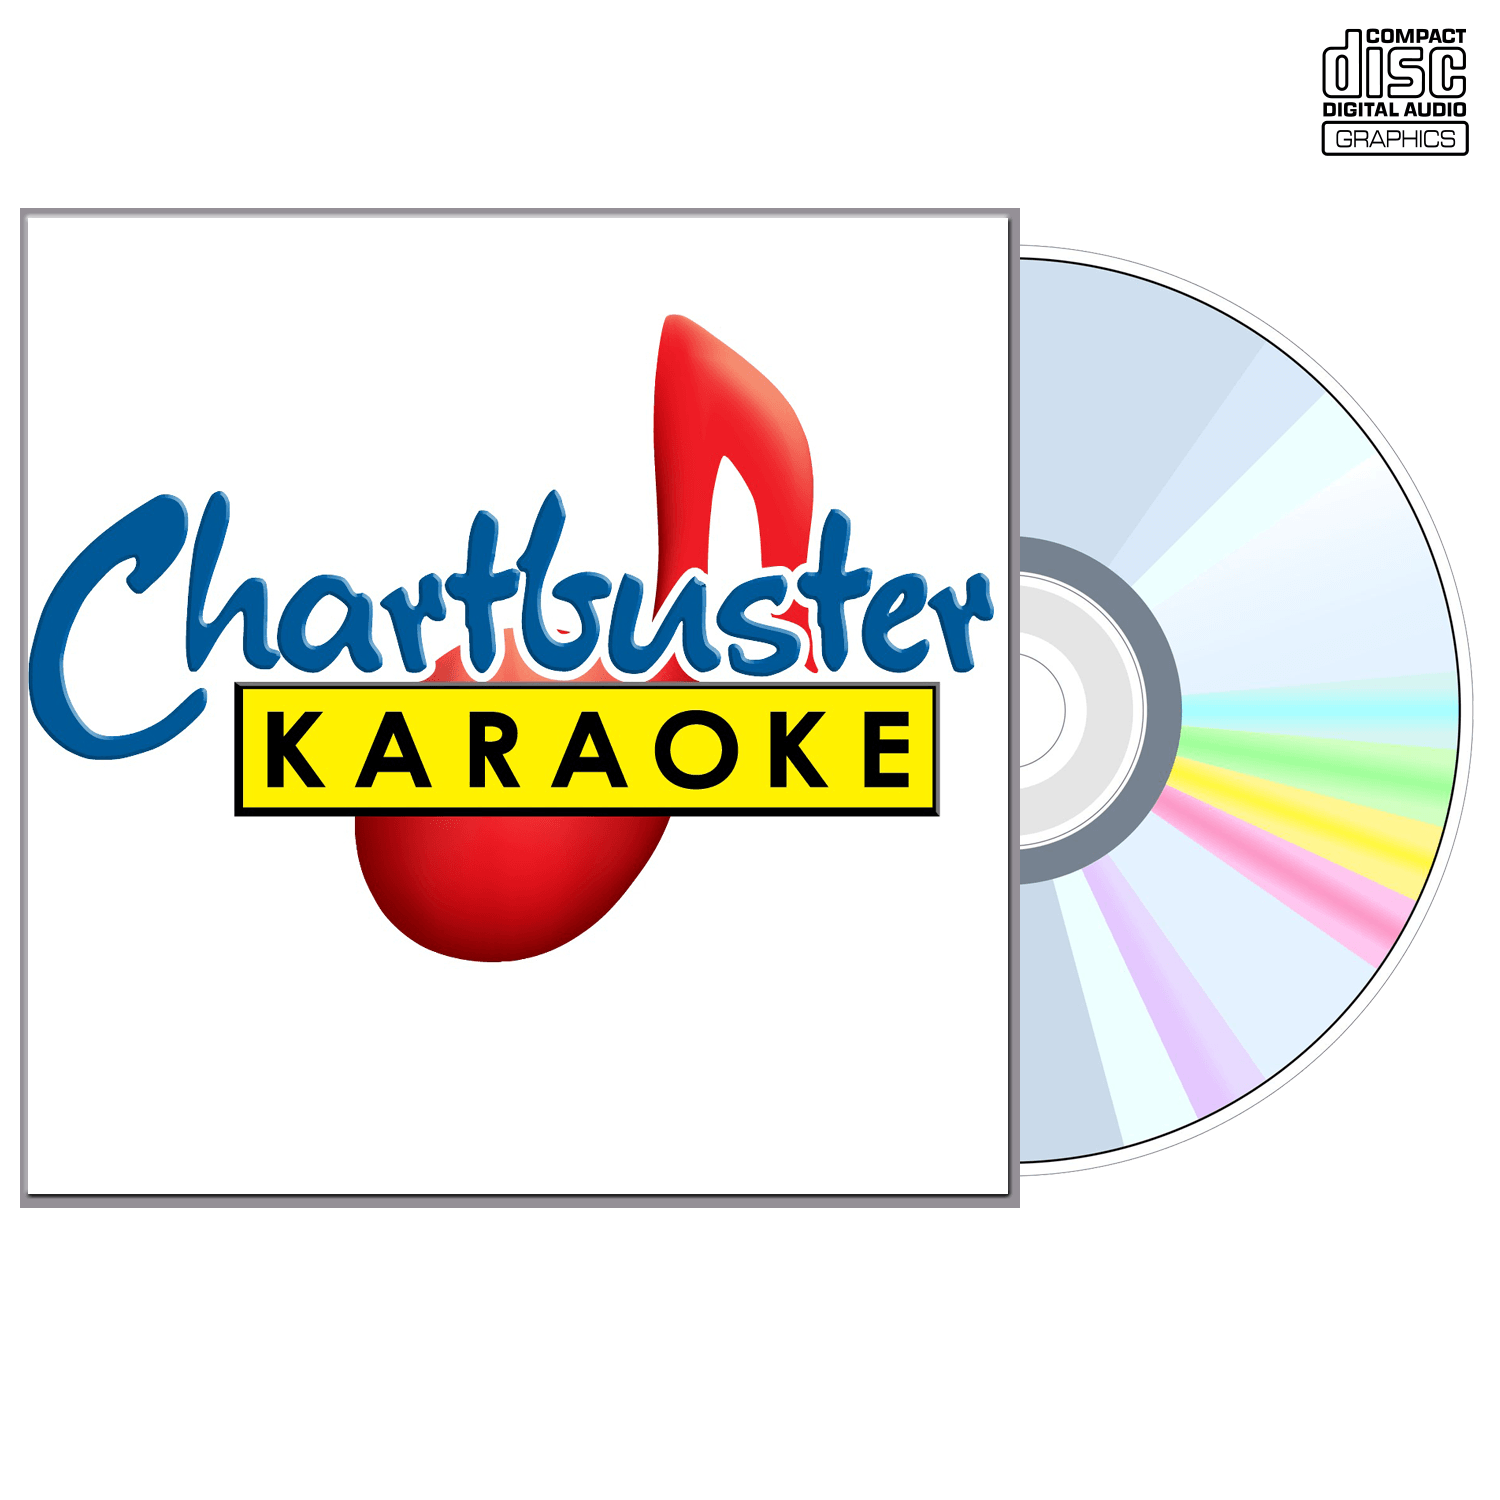 Ralph Stanley - CD+G - Chartbuster Karaoke - Karaoke Home Entertainment